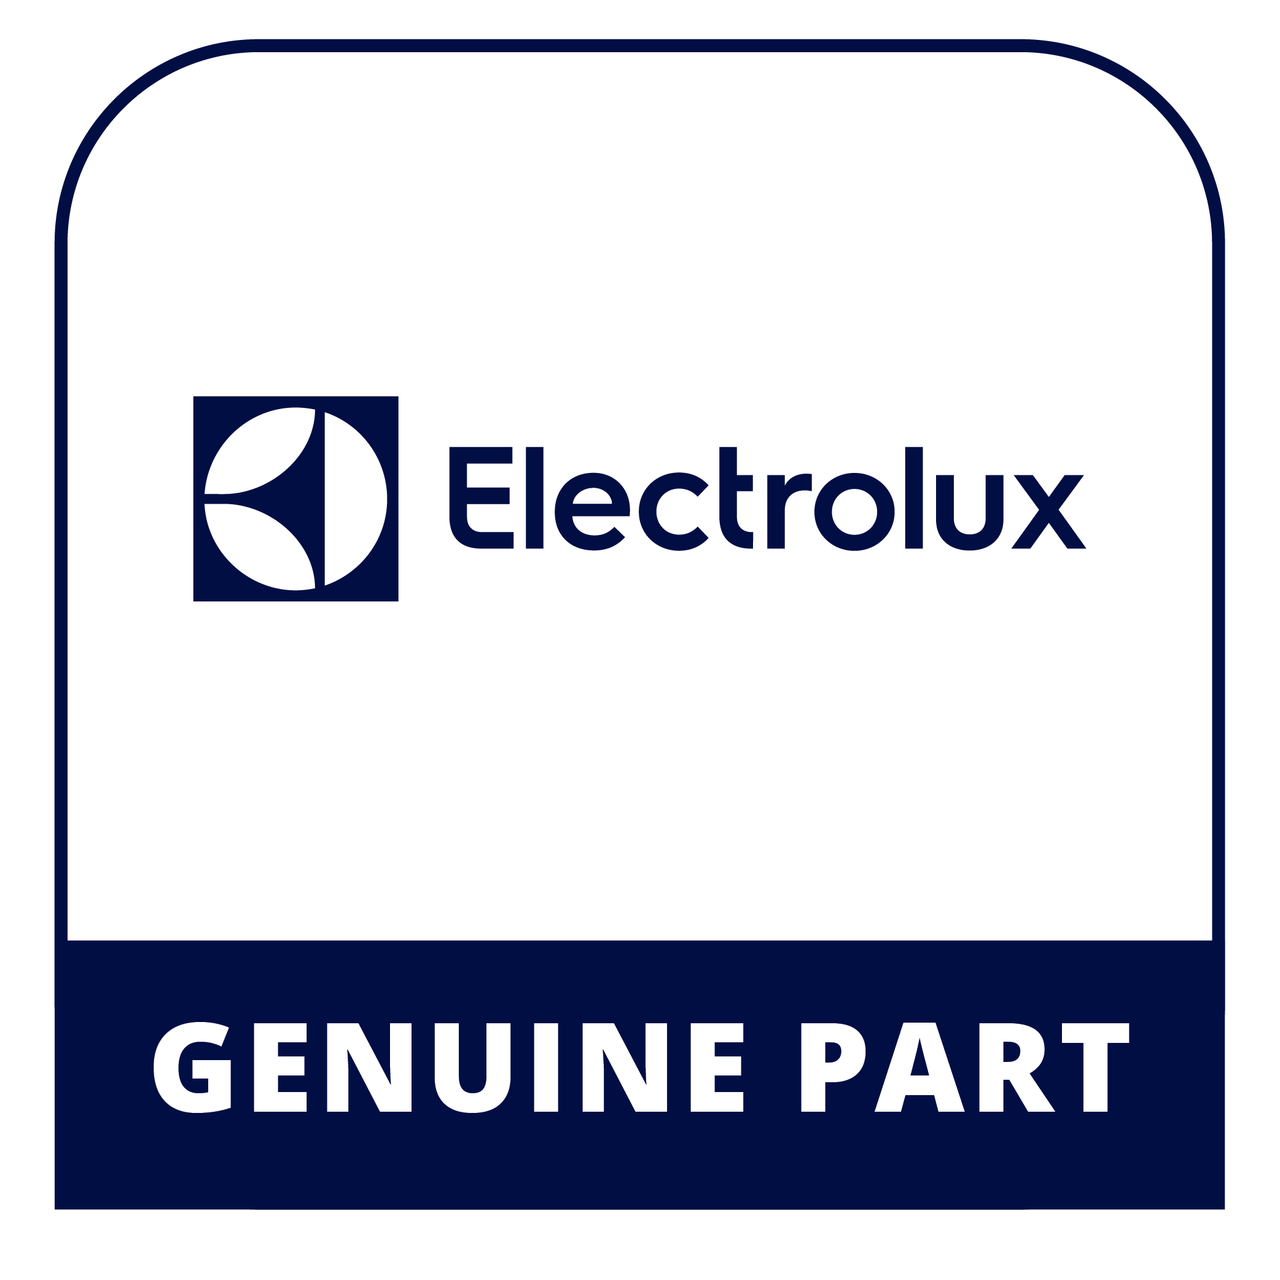 Frigidaire - Electrolux 5304493974 - Handle - Genuine Electrolux Part